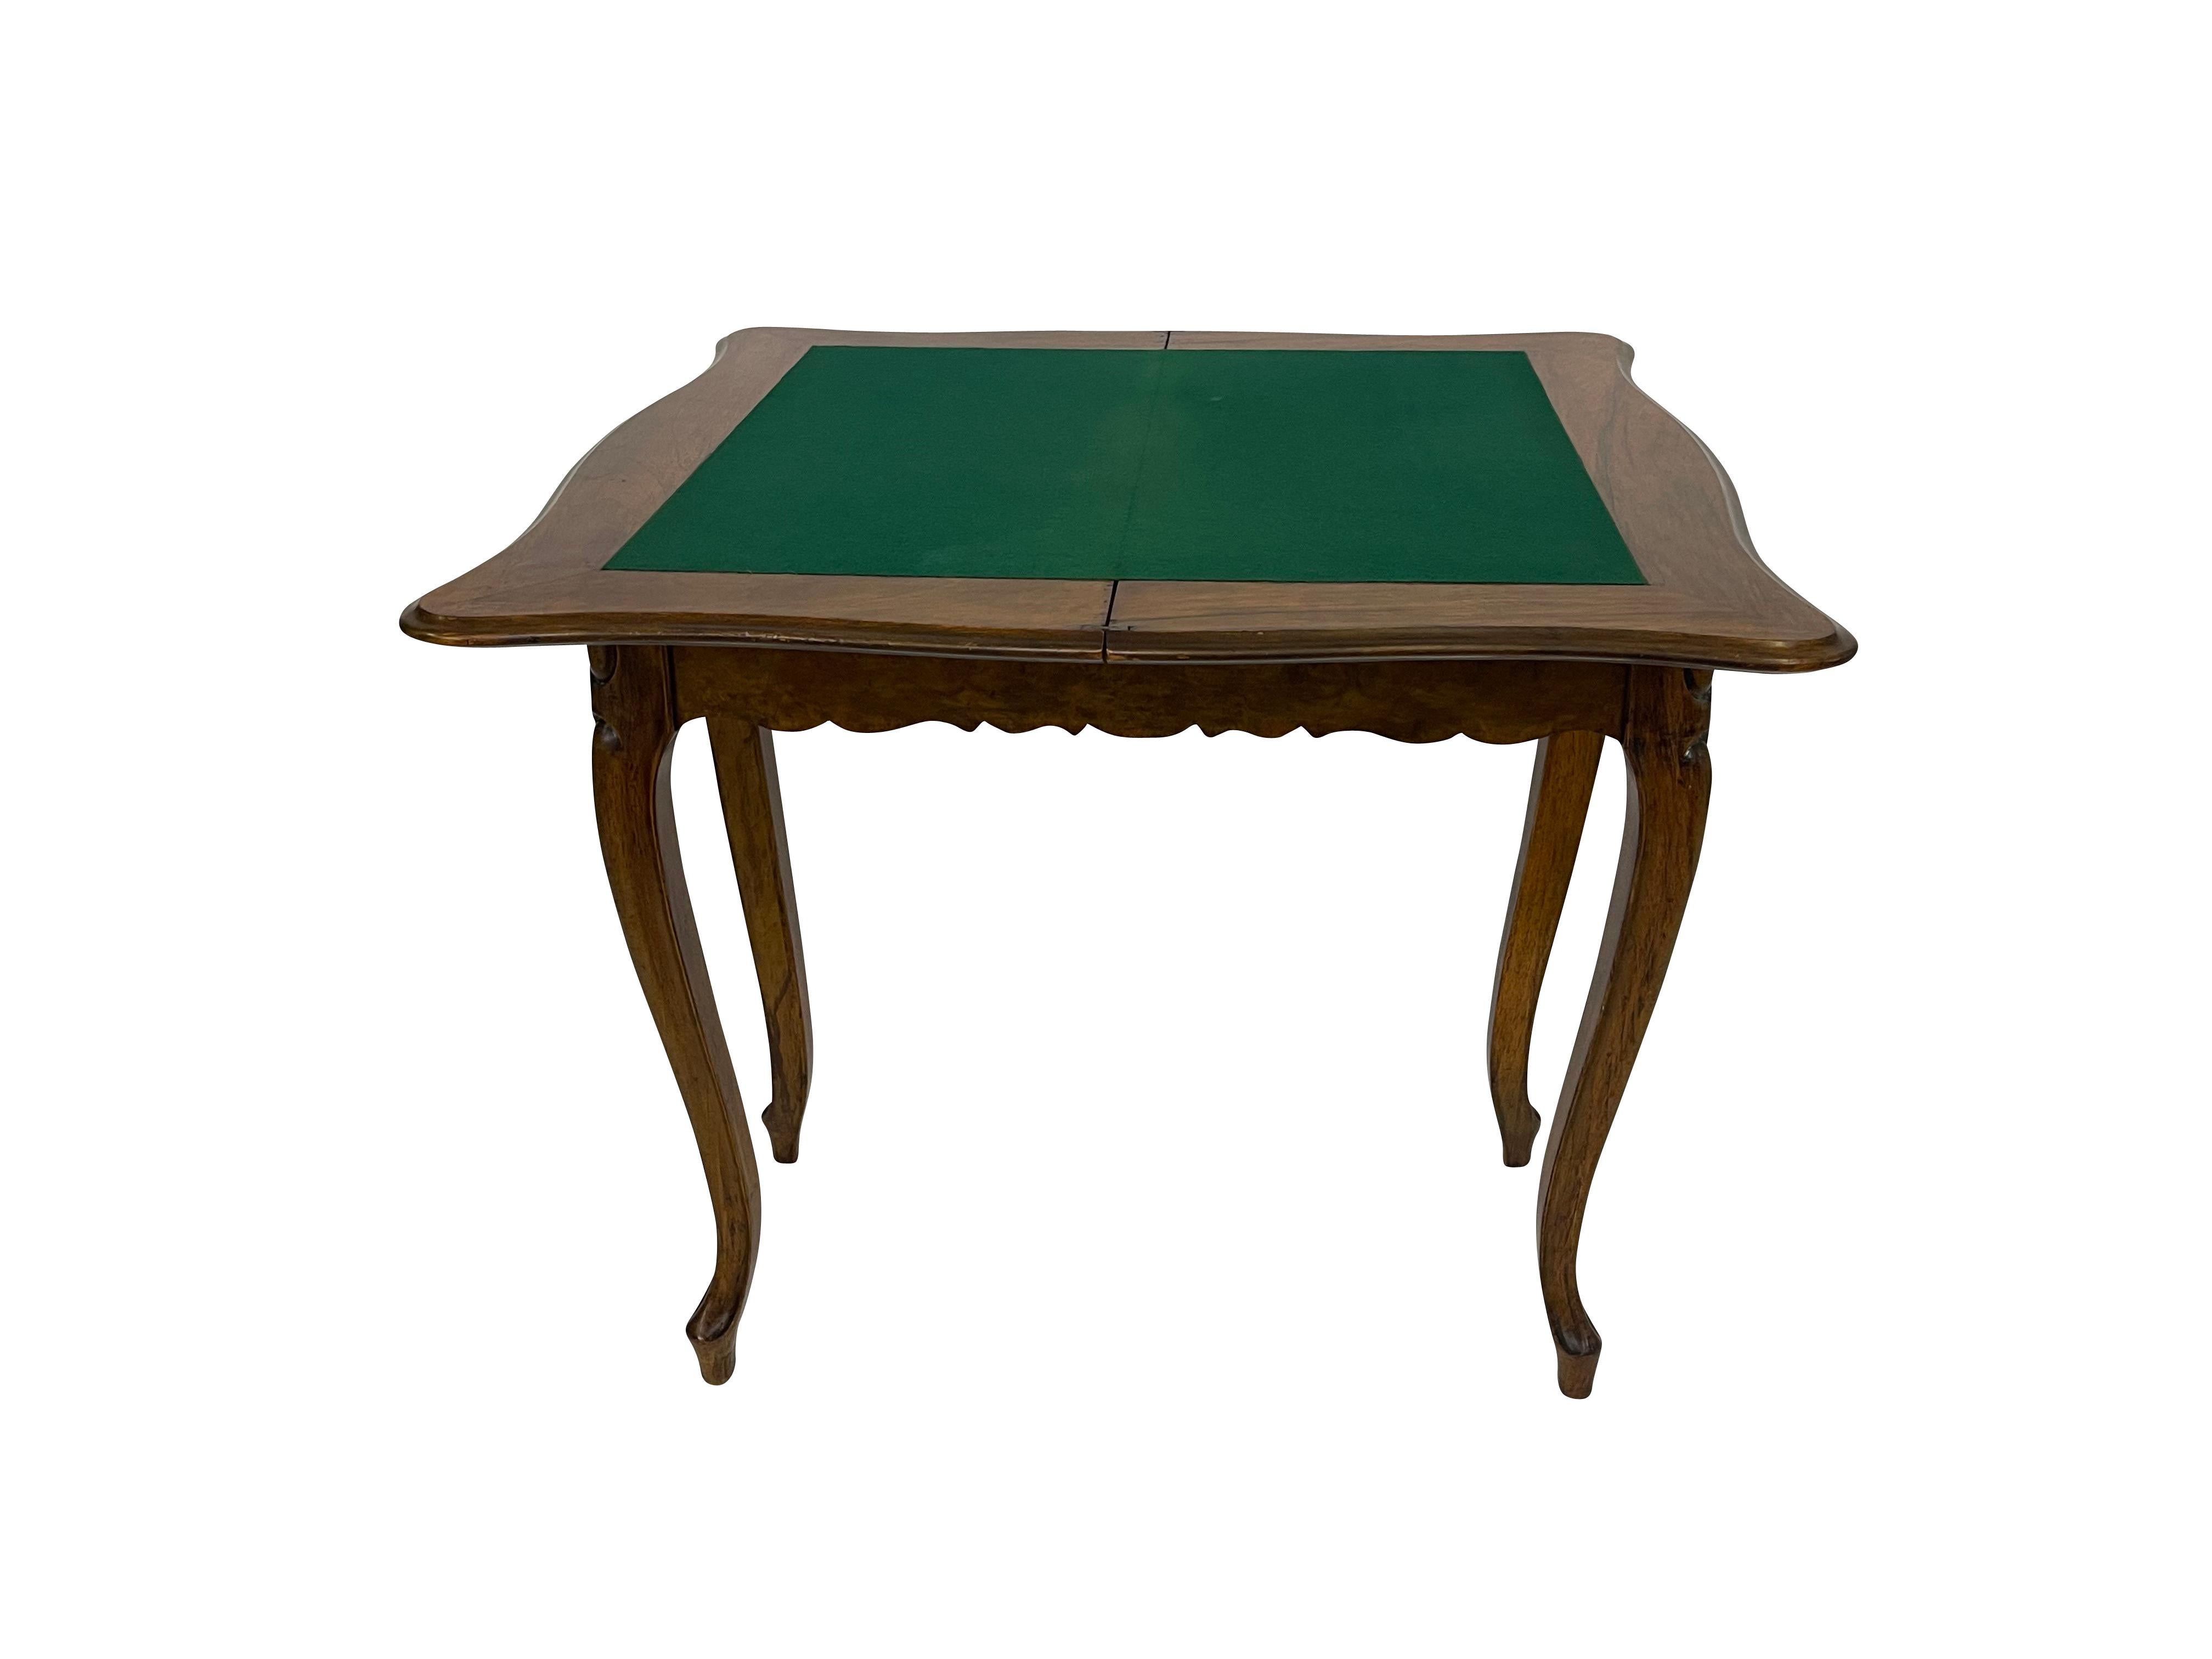 19th Century  English Rococo Revival Burl  Walnut Games Table  1